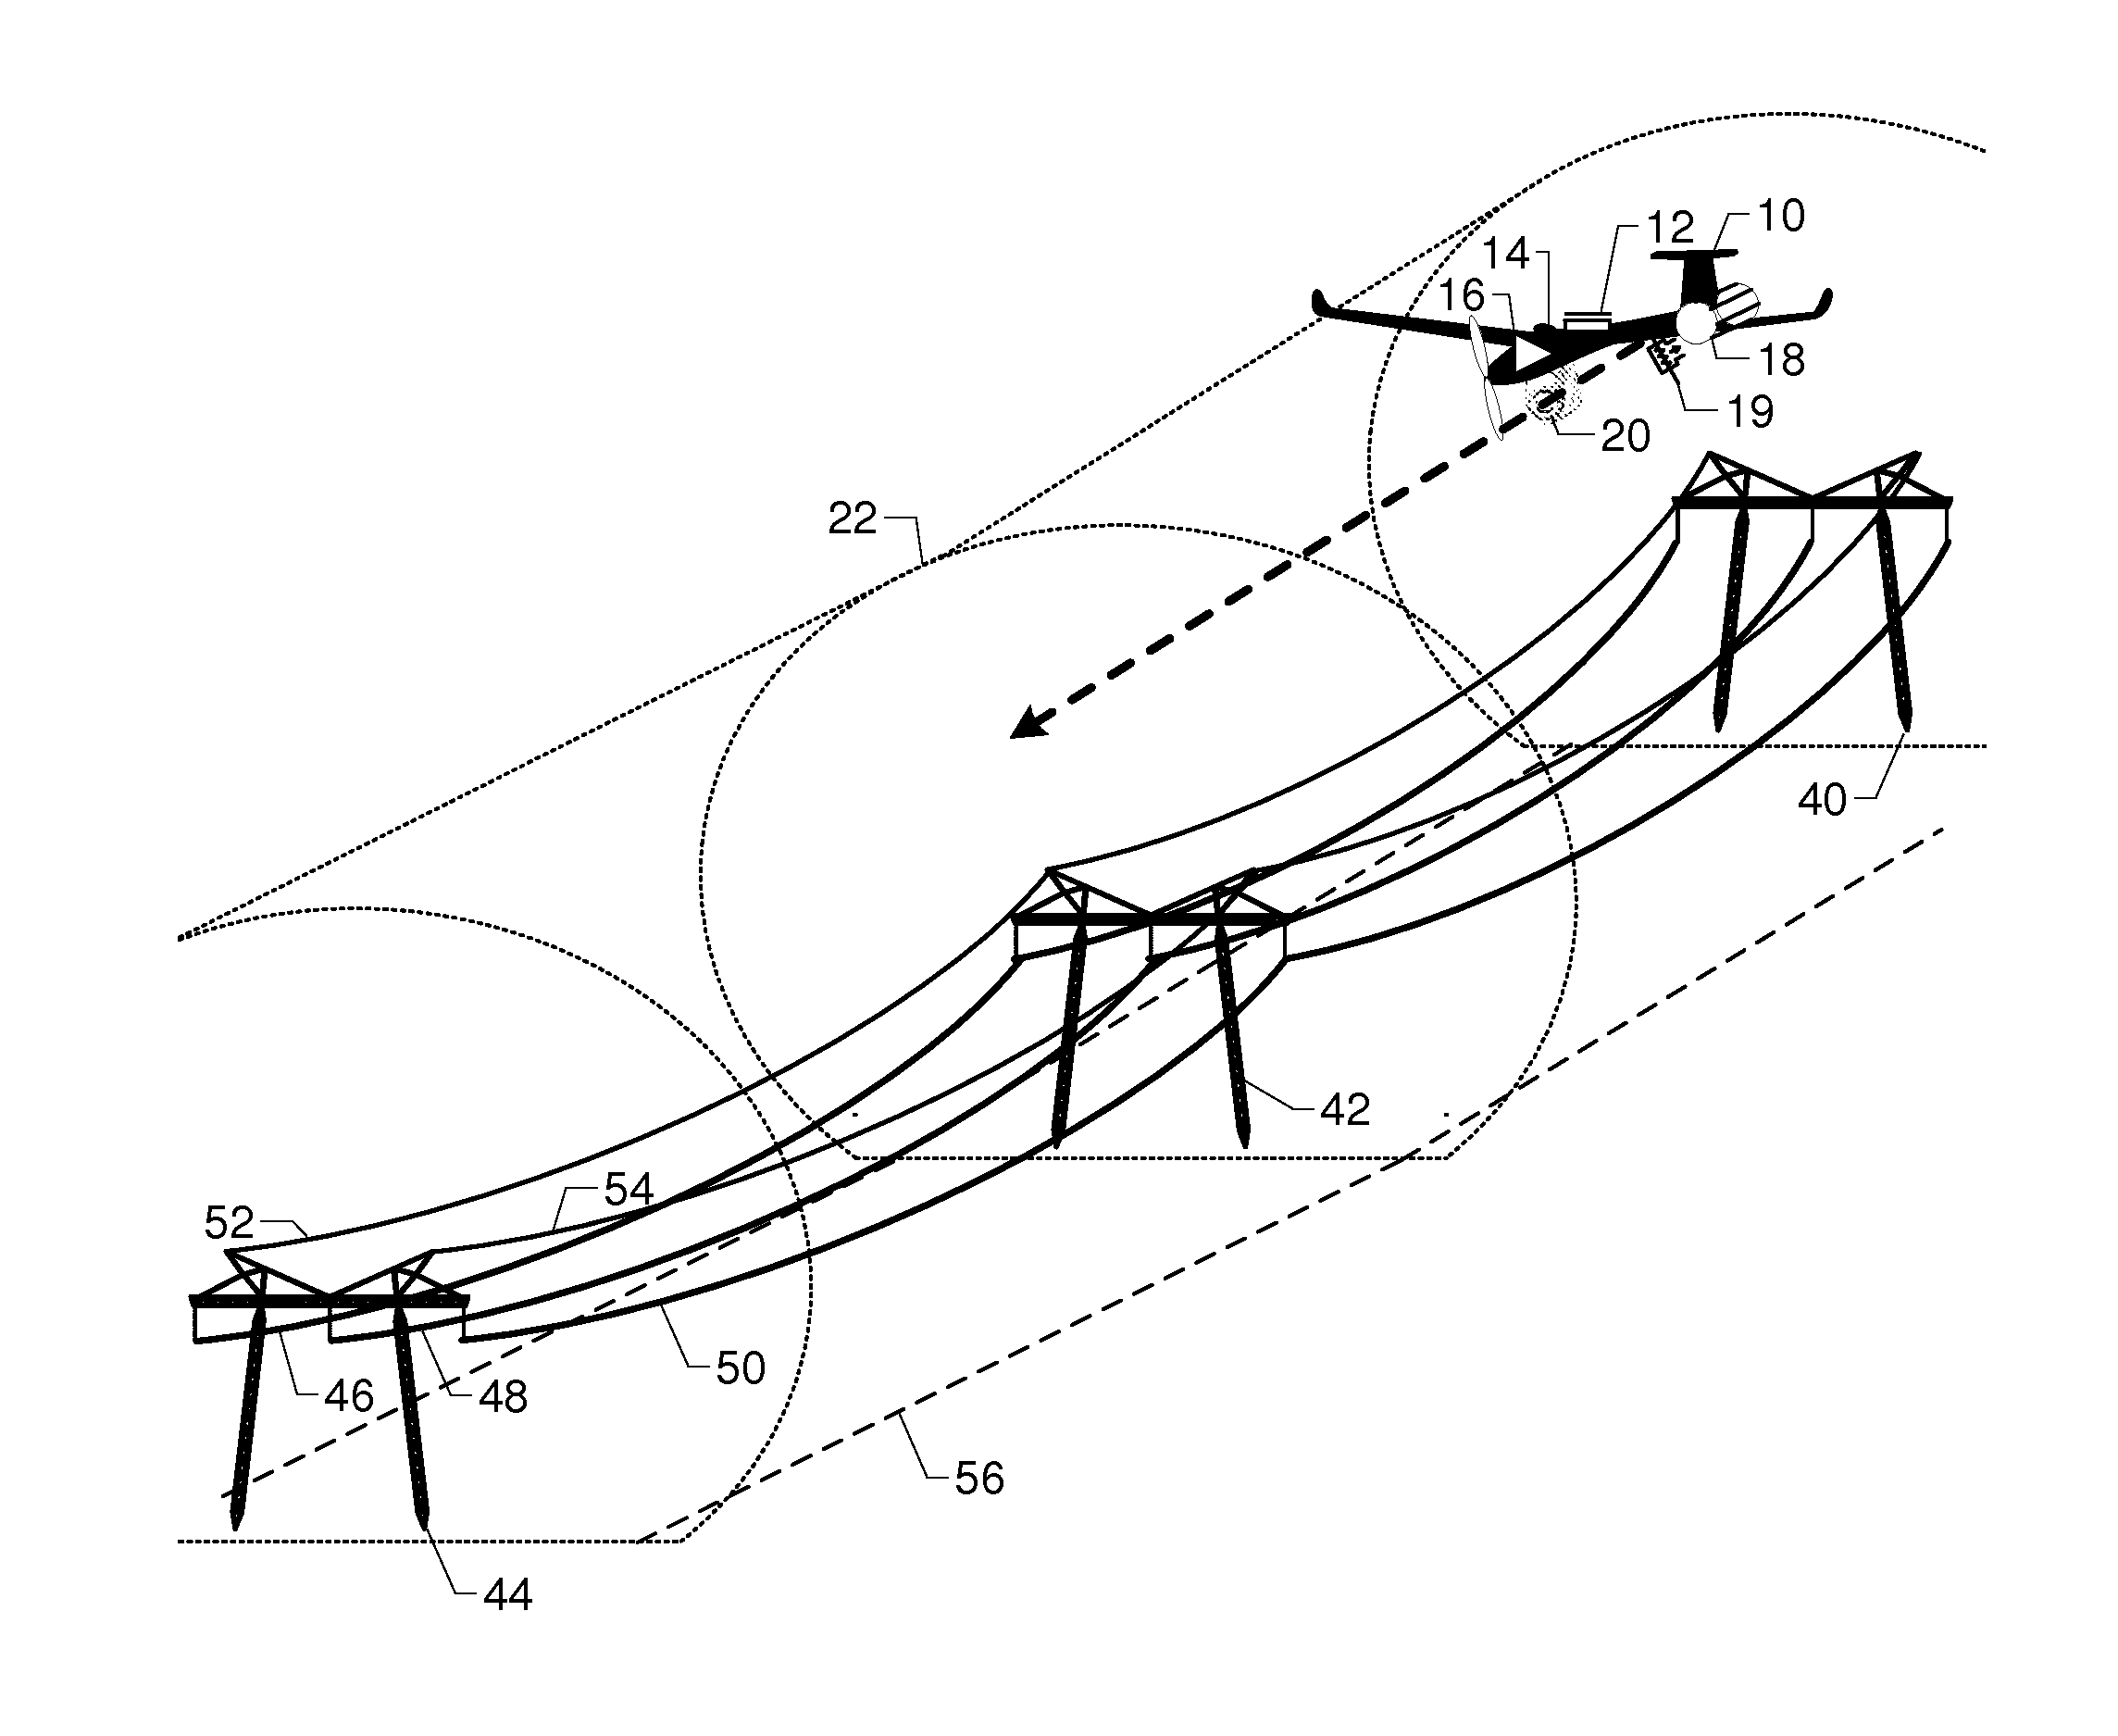 UAV Constraint in Overhead Line Inspection